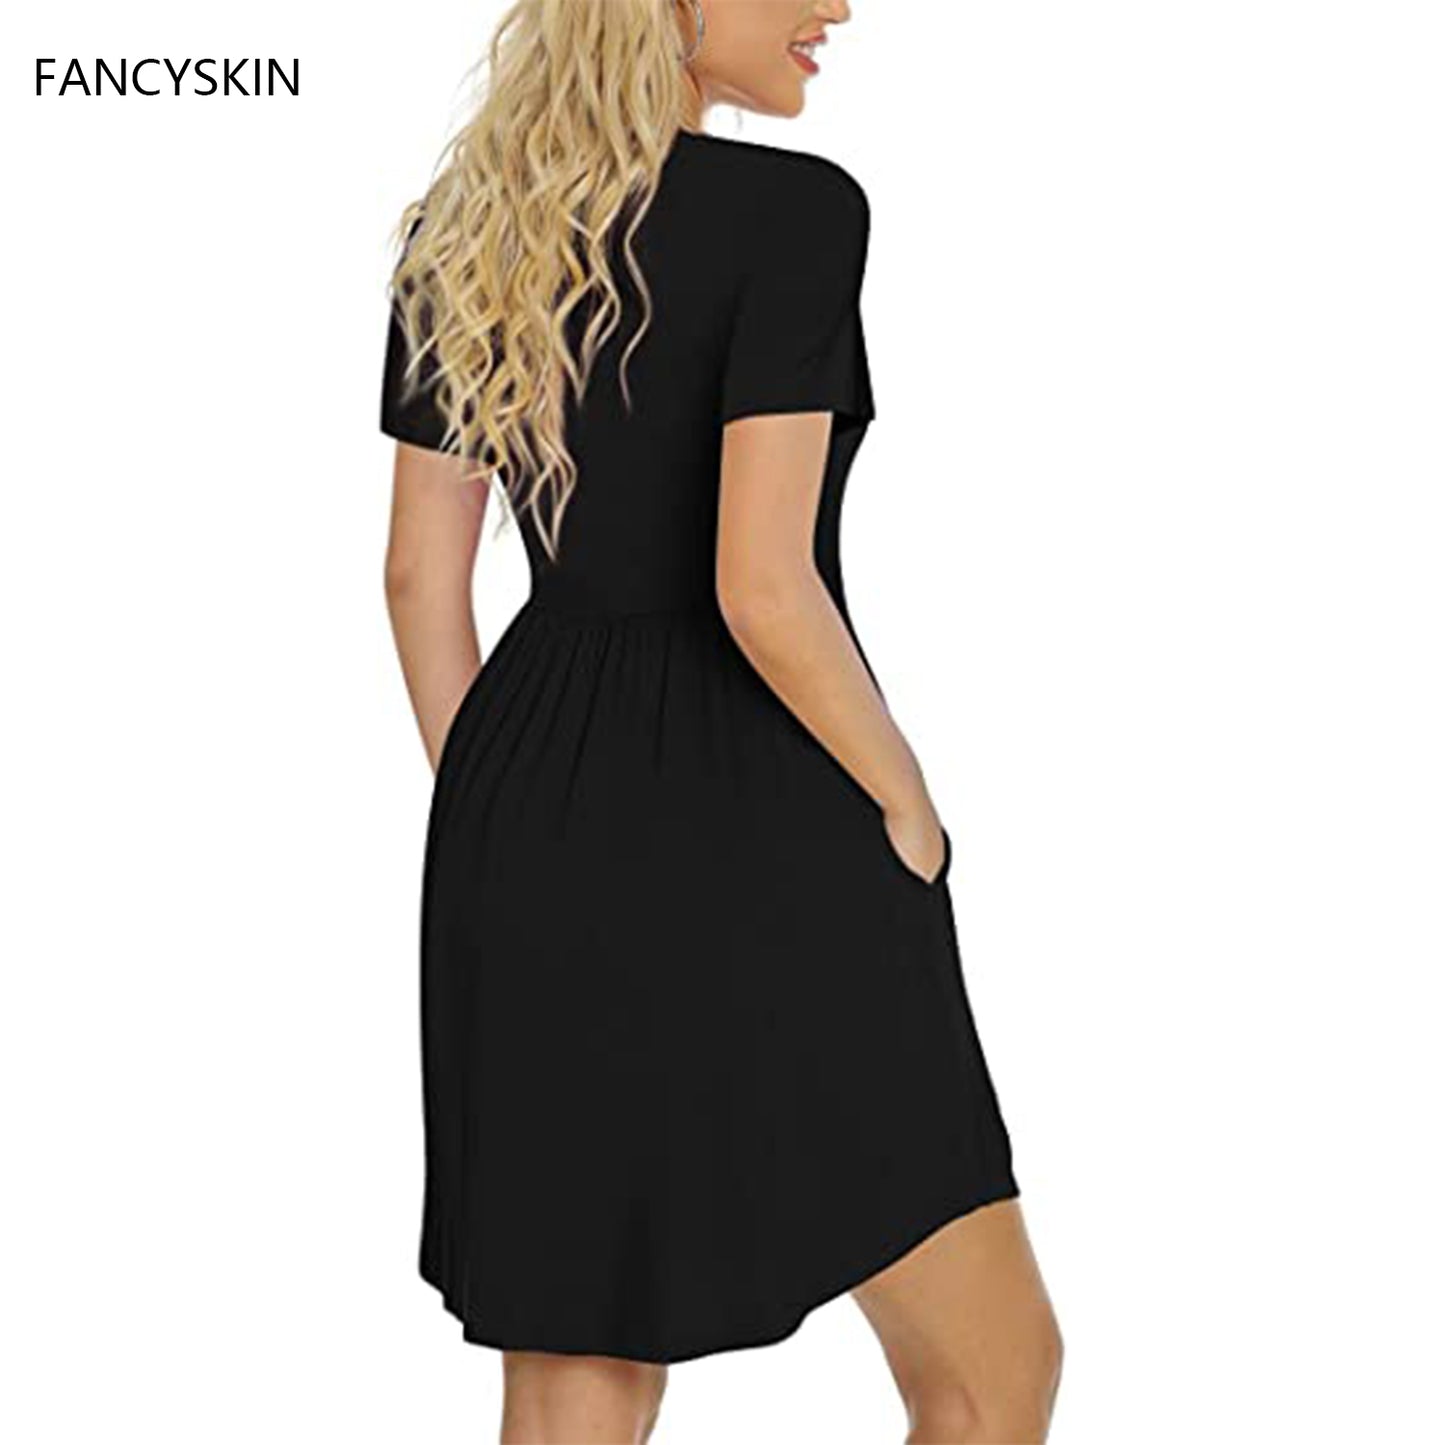 FANCYSKIN Women's Summer Short Sleeve Casual Dresses